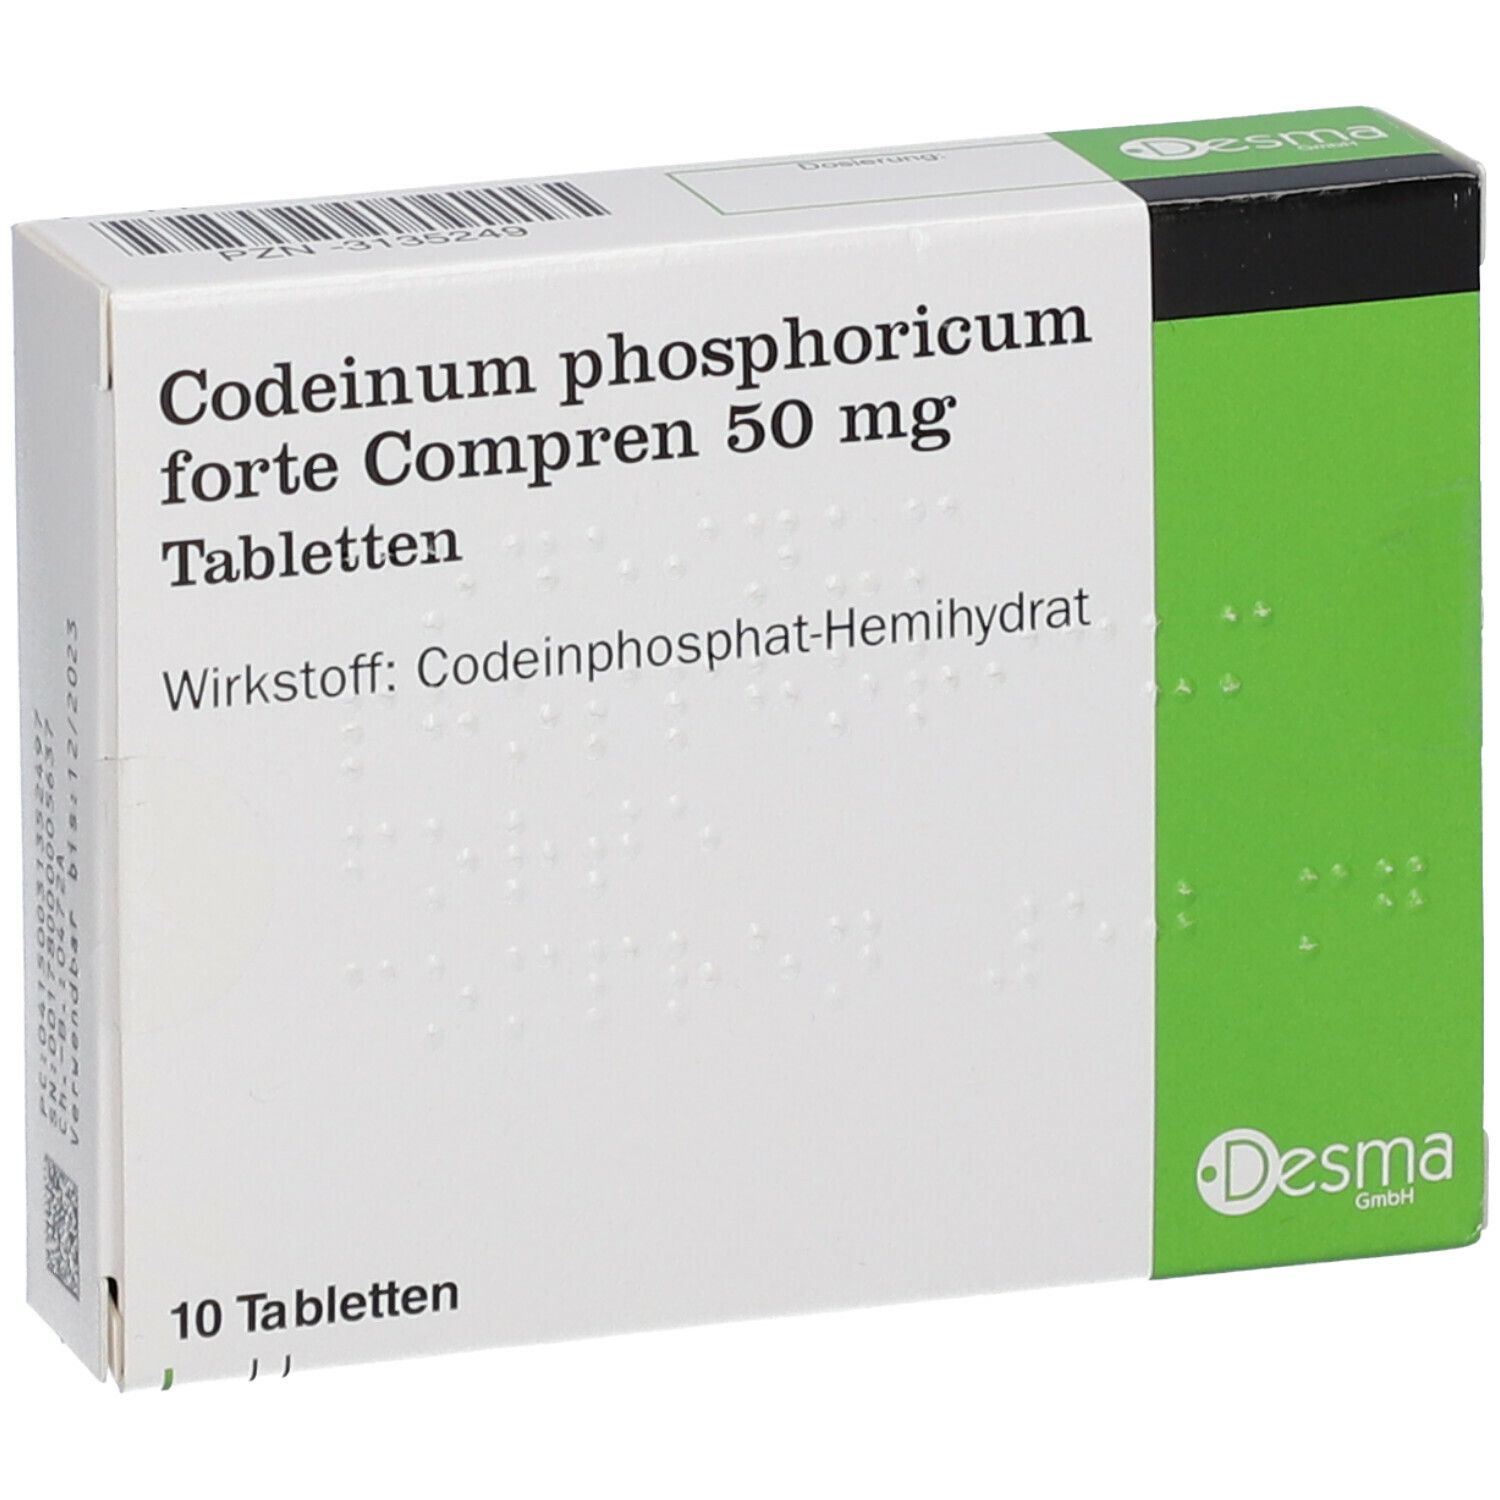 Codeinum phosphoricum forte Compren 50 mg